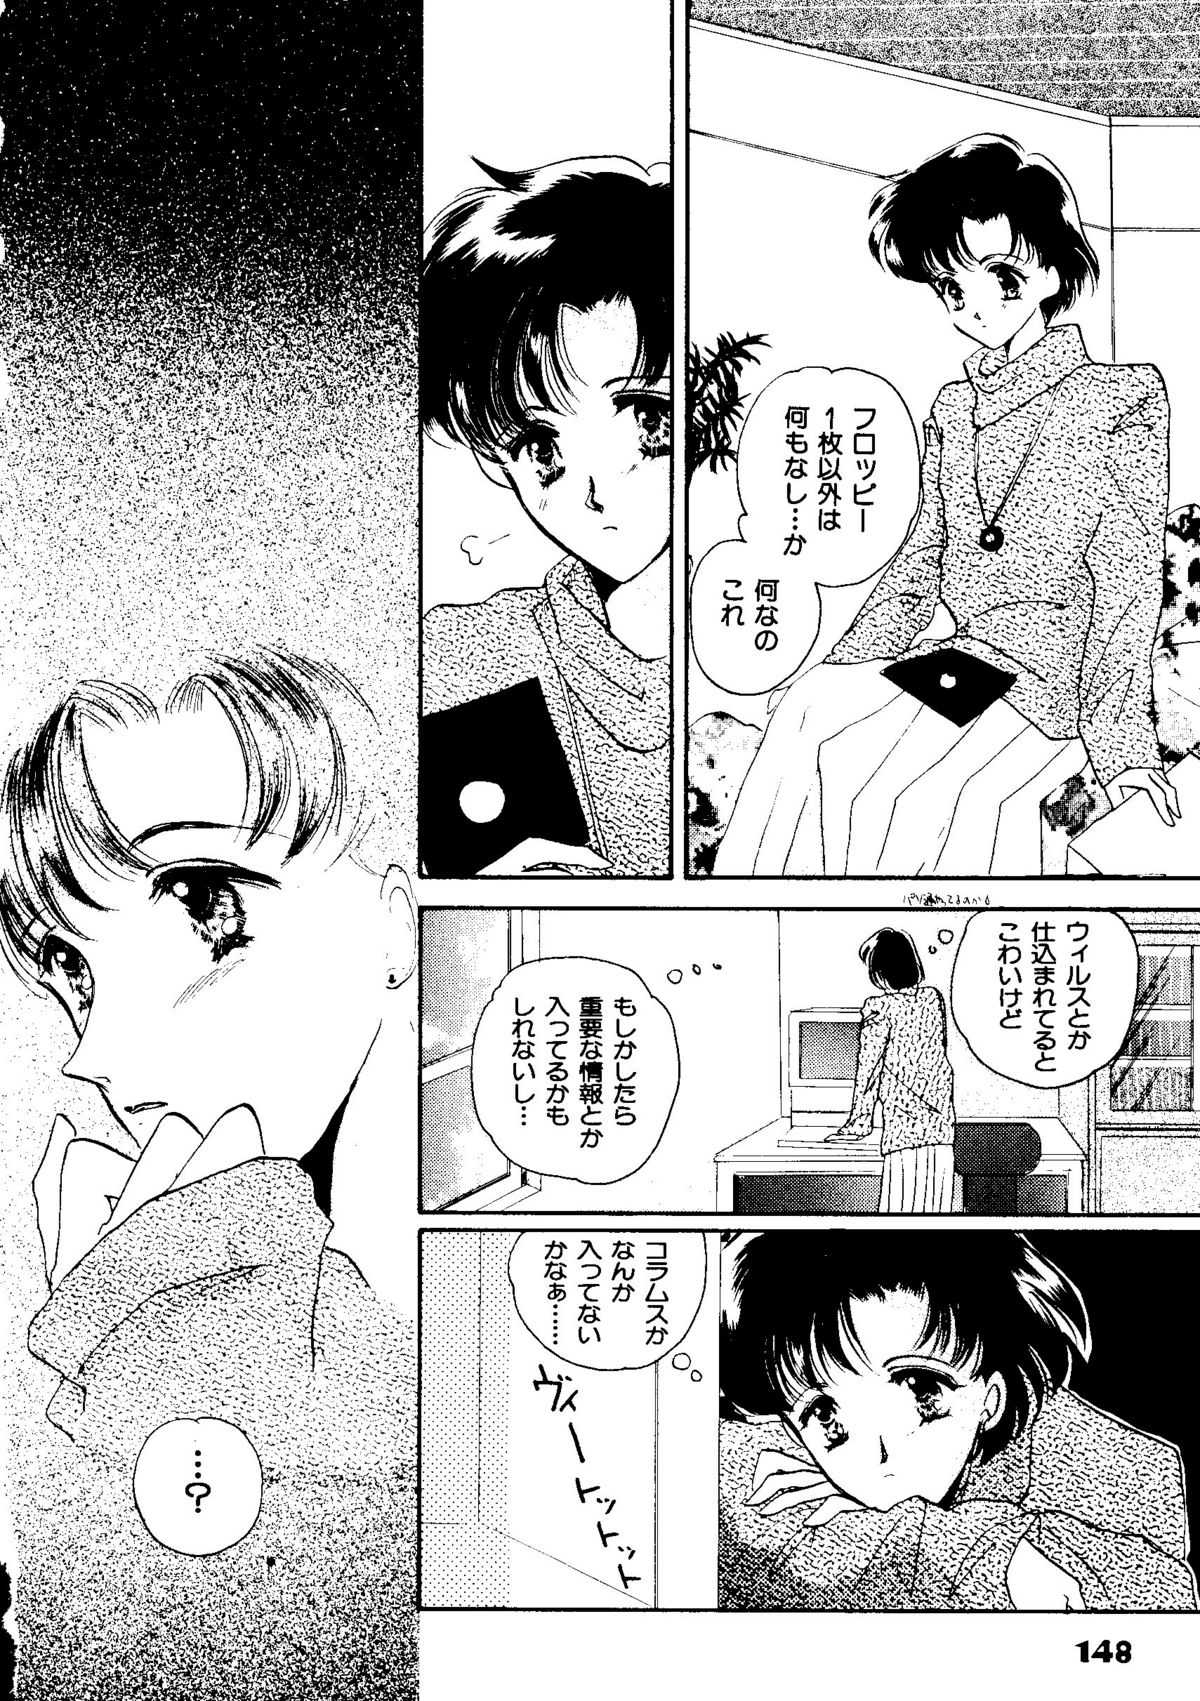 doujinshi anthology Selenity Romance (Sailor Moon) セ レ ニ テ ィ ロ マ ン ス - SELE...